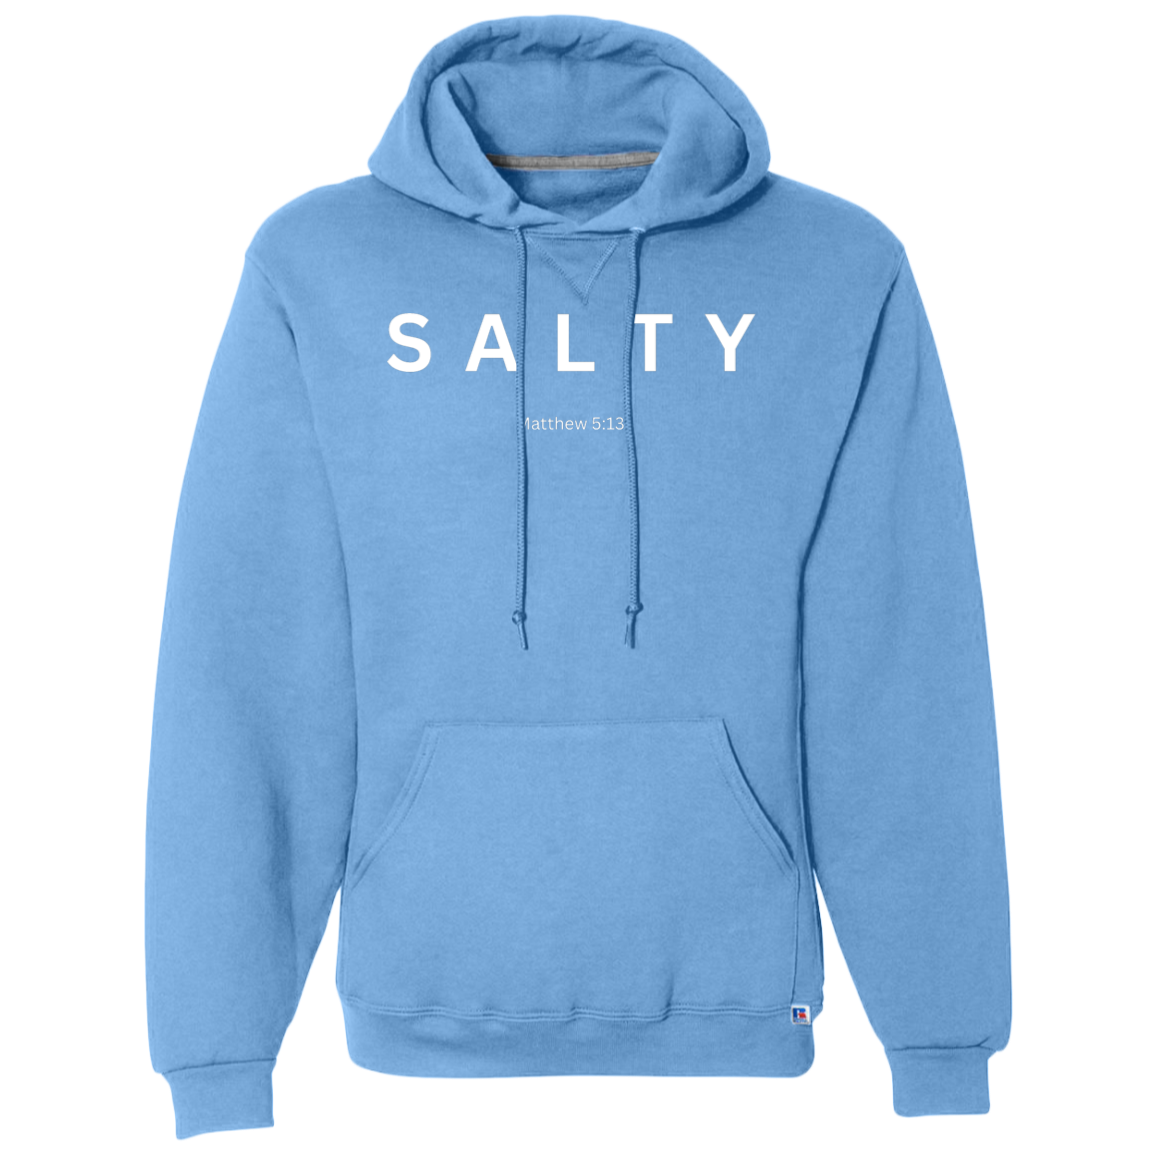 Salty Dri-Power Fleece Pullover Hoodie white lettering